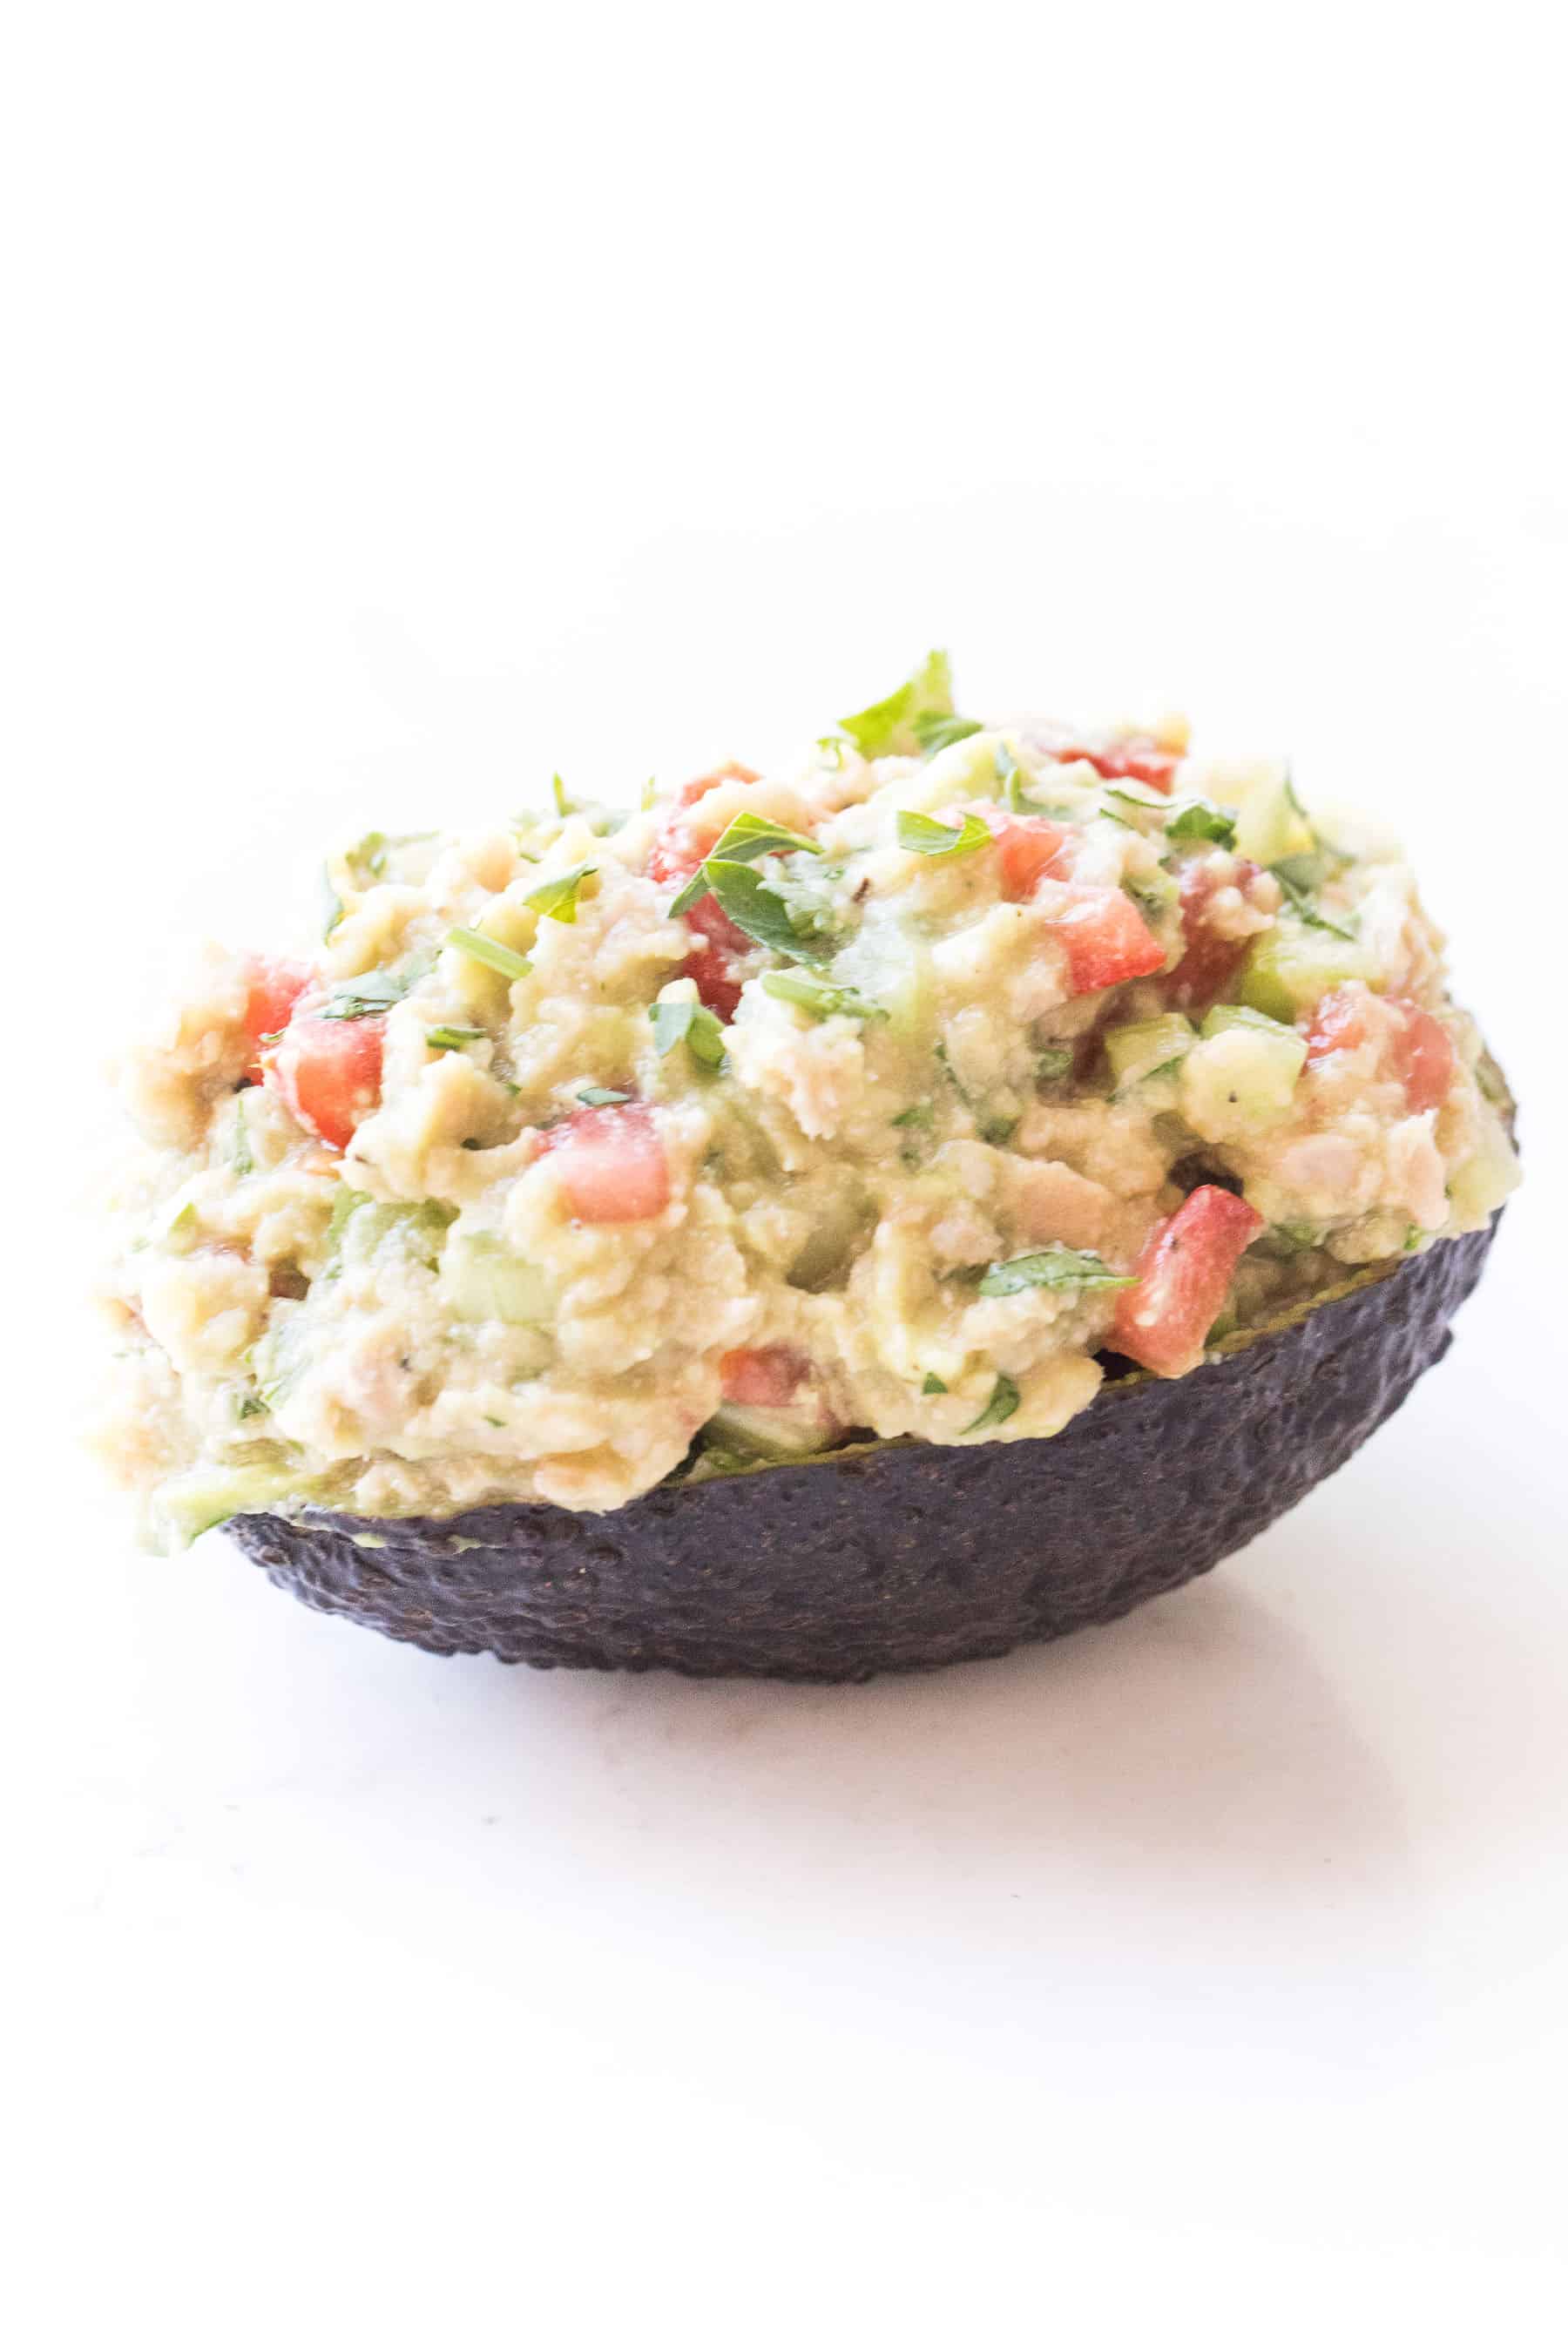 Avocado tuna salad in an avocado boat skin on a white background